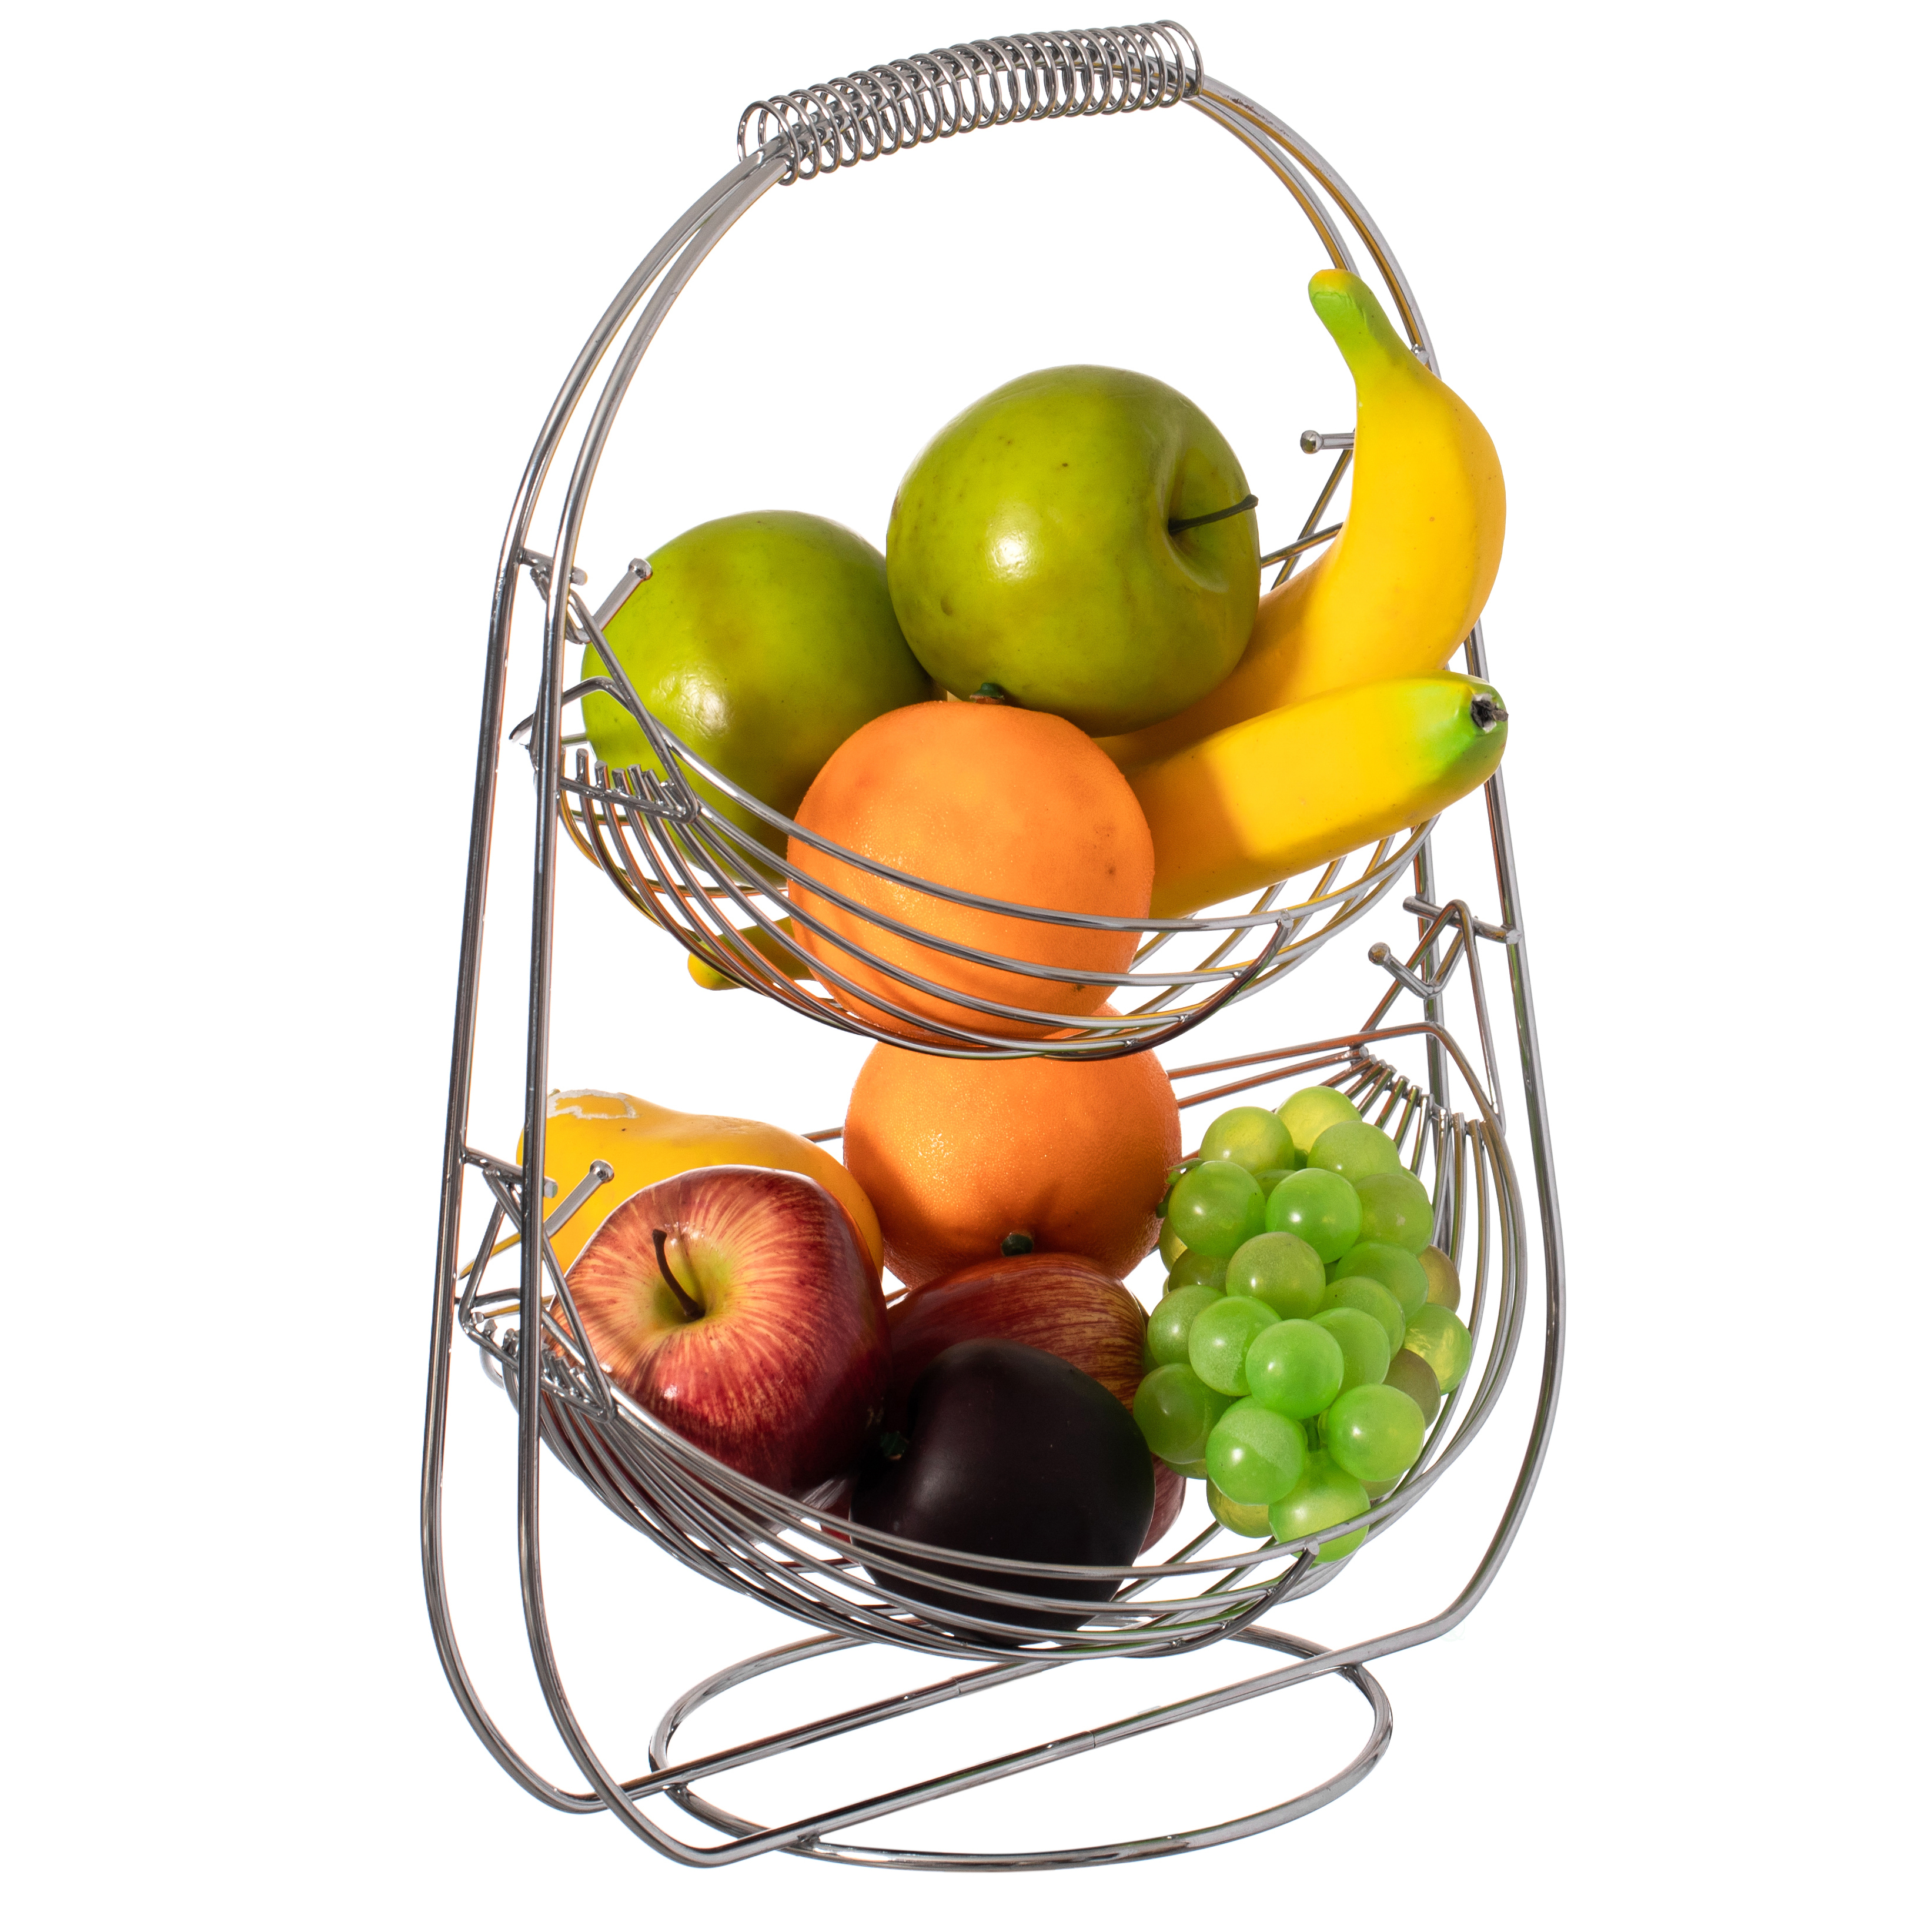 2 Tier Metal Fruit Holder Swing Basket For Kitchen Detachable Countertop Vegetables Storage Organizer With Display Hammock Stand